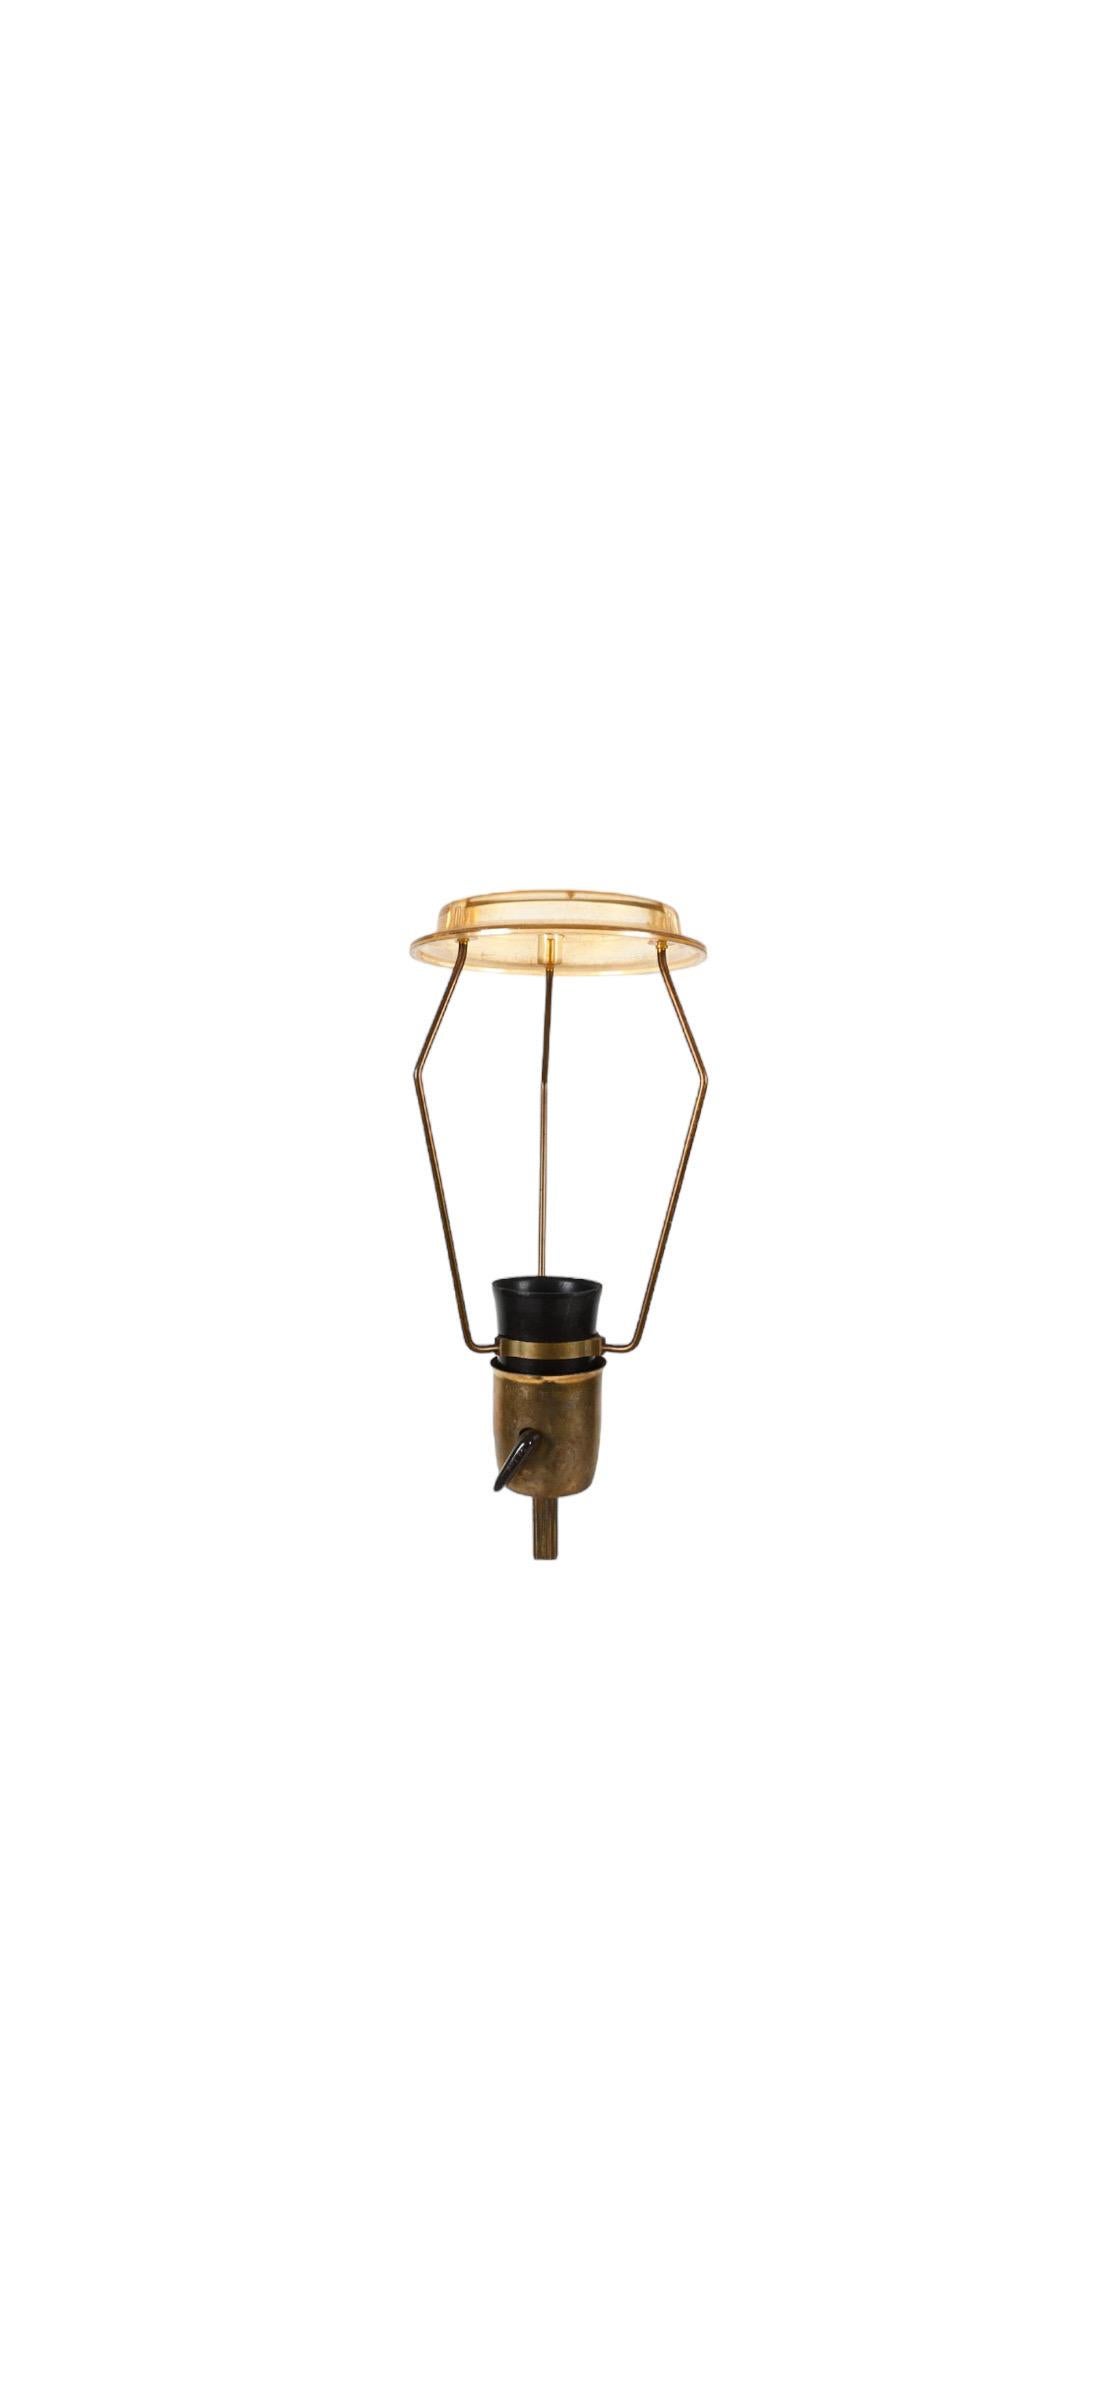 Elegant Rosewood and Brass Midcentury Modern Floor Lamp For Sale 1